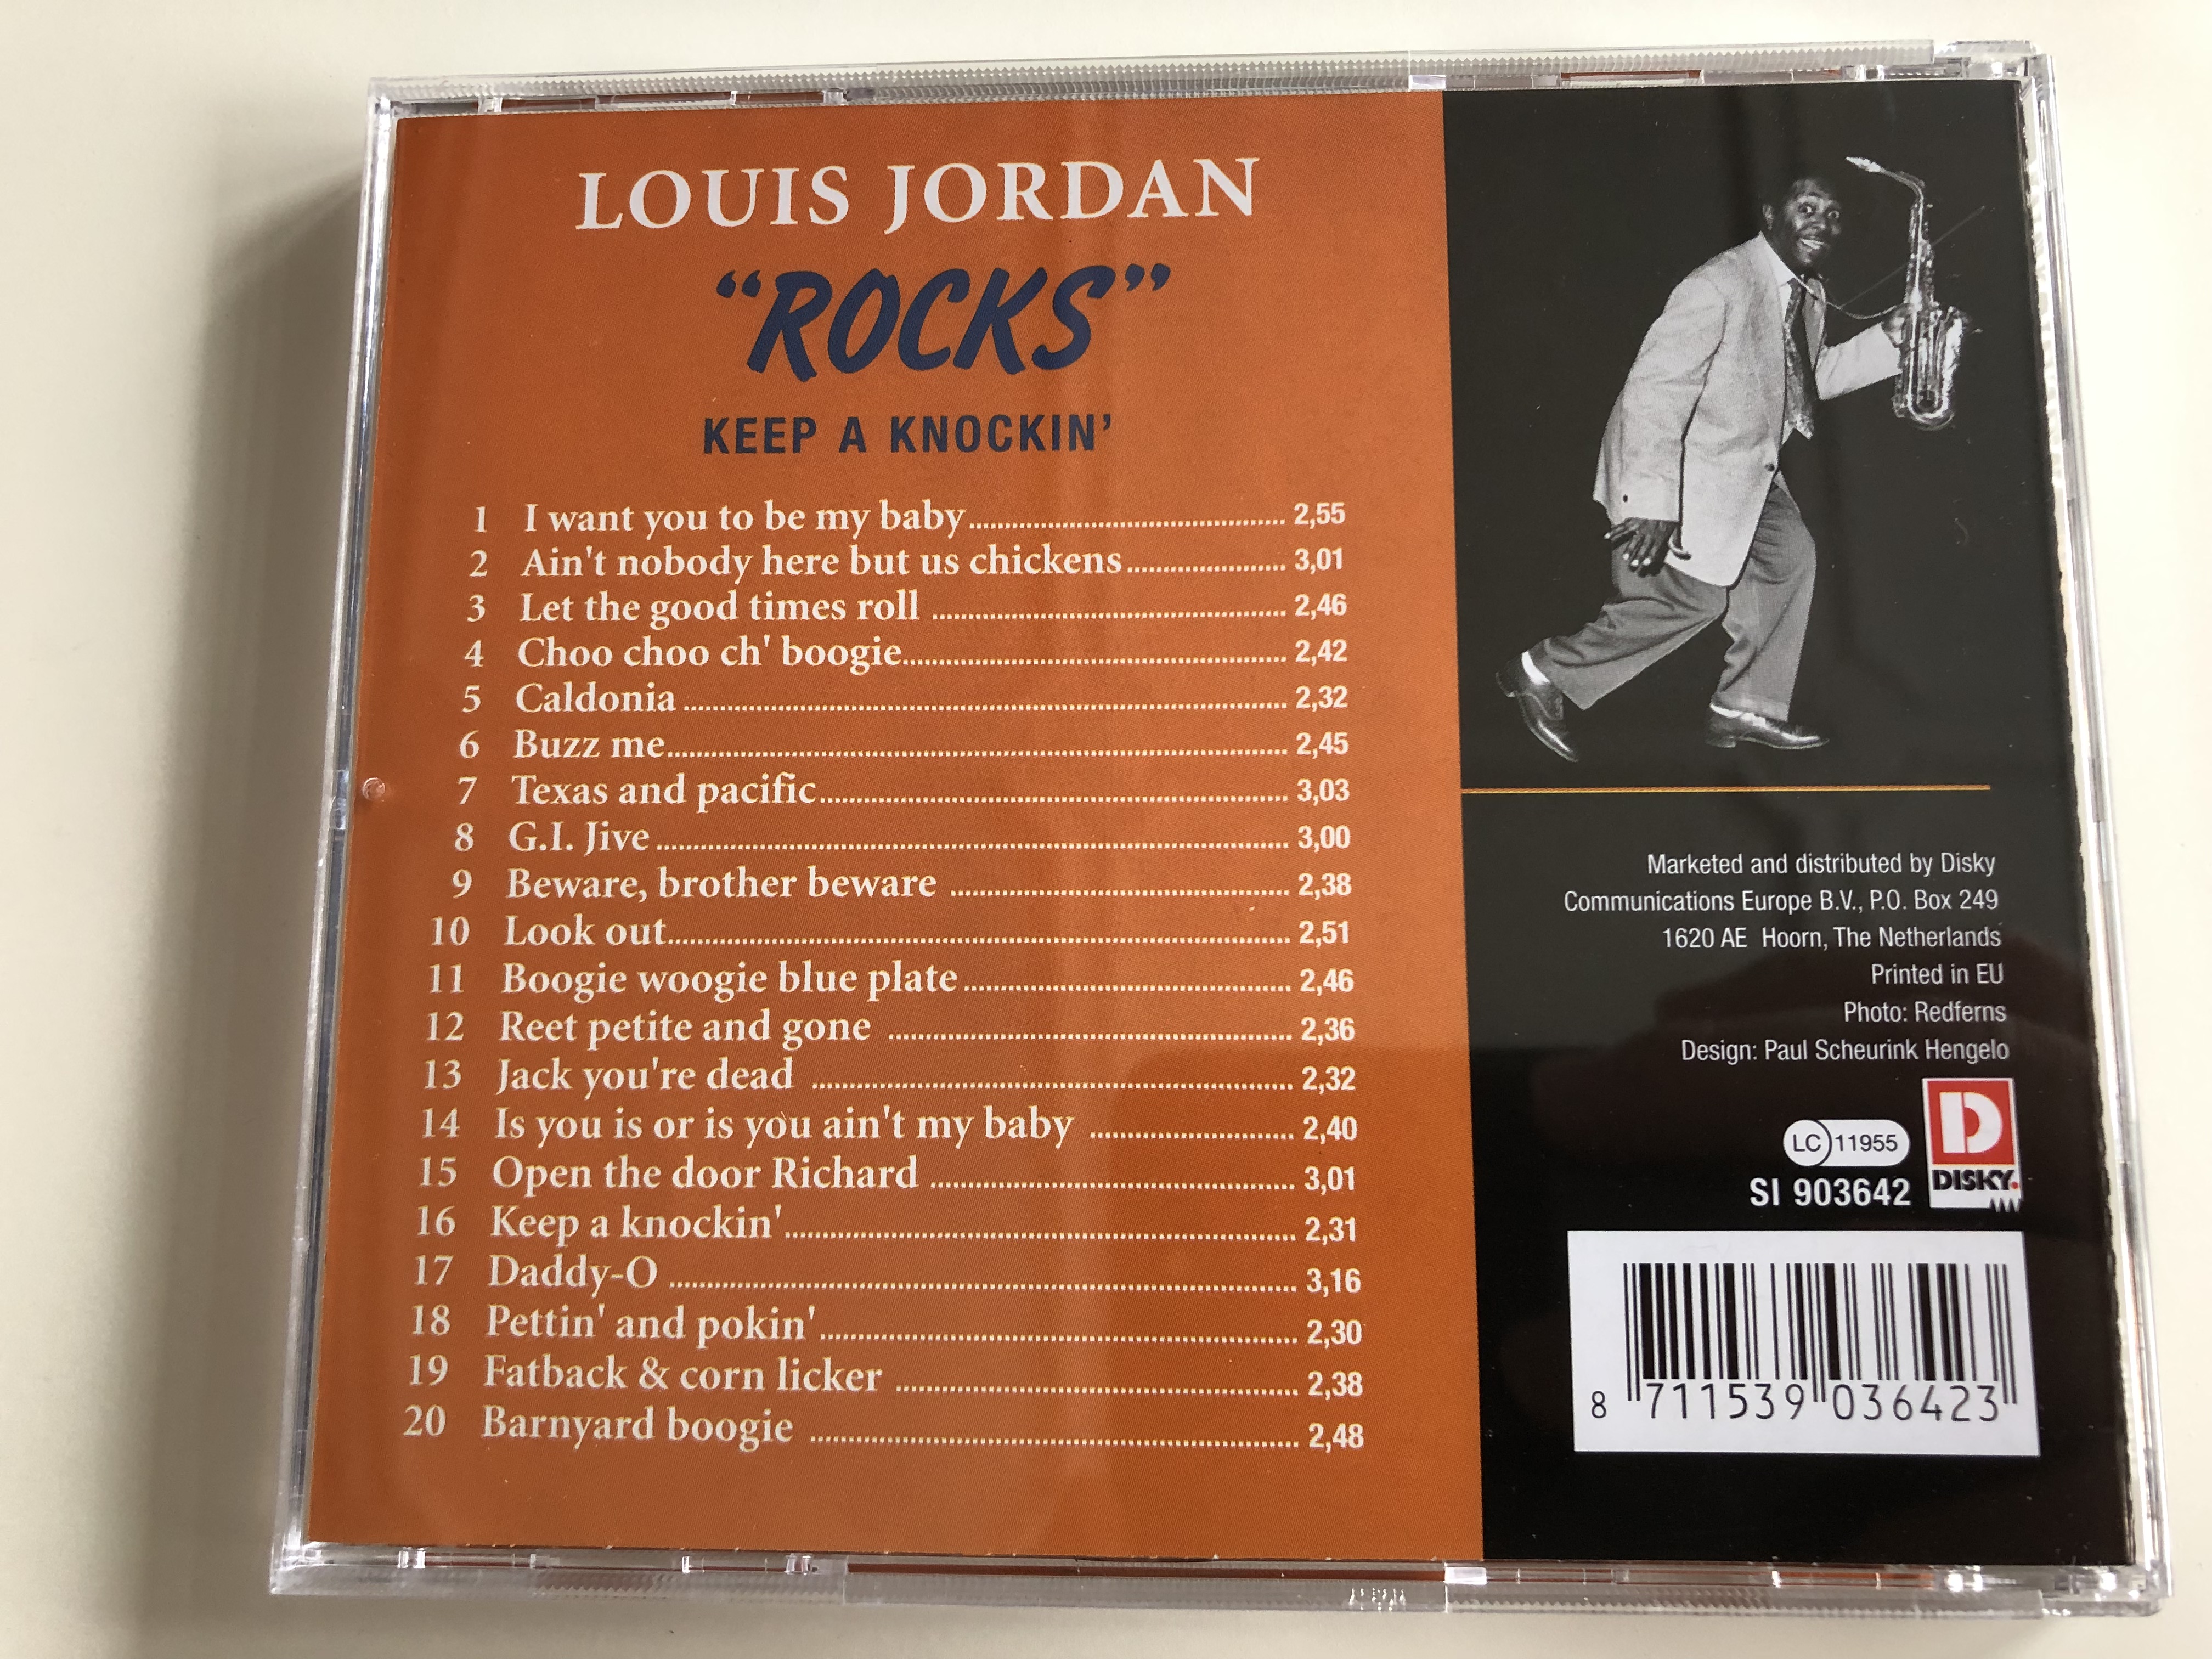 louis-jordan-rocks-keep-a-knockin-original-artist-original-songs-audio-cd-2006-si-903642-disky-3-.jpg